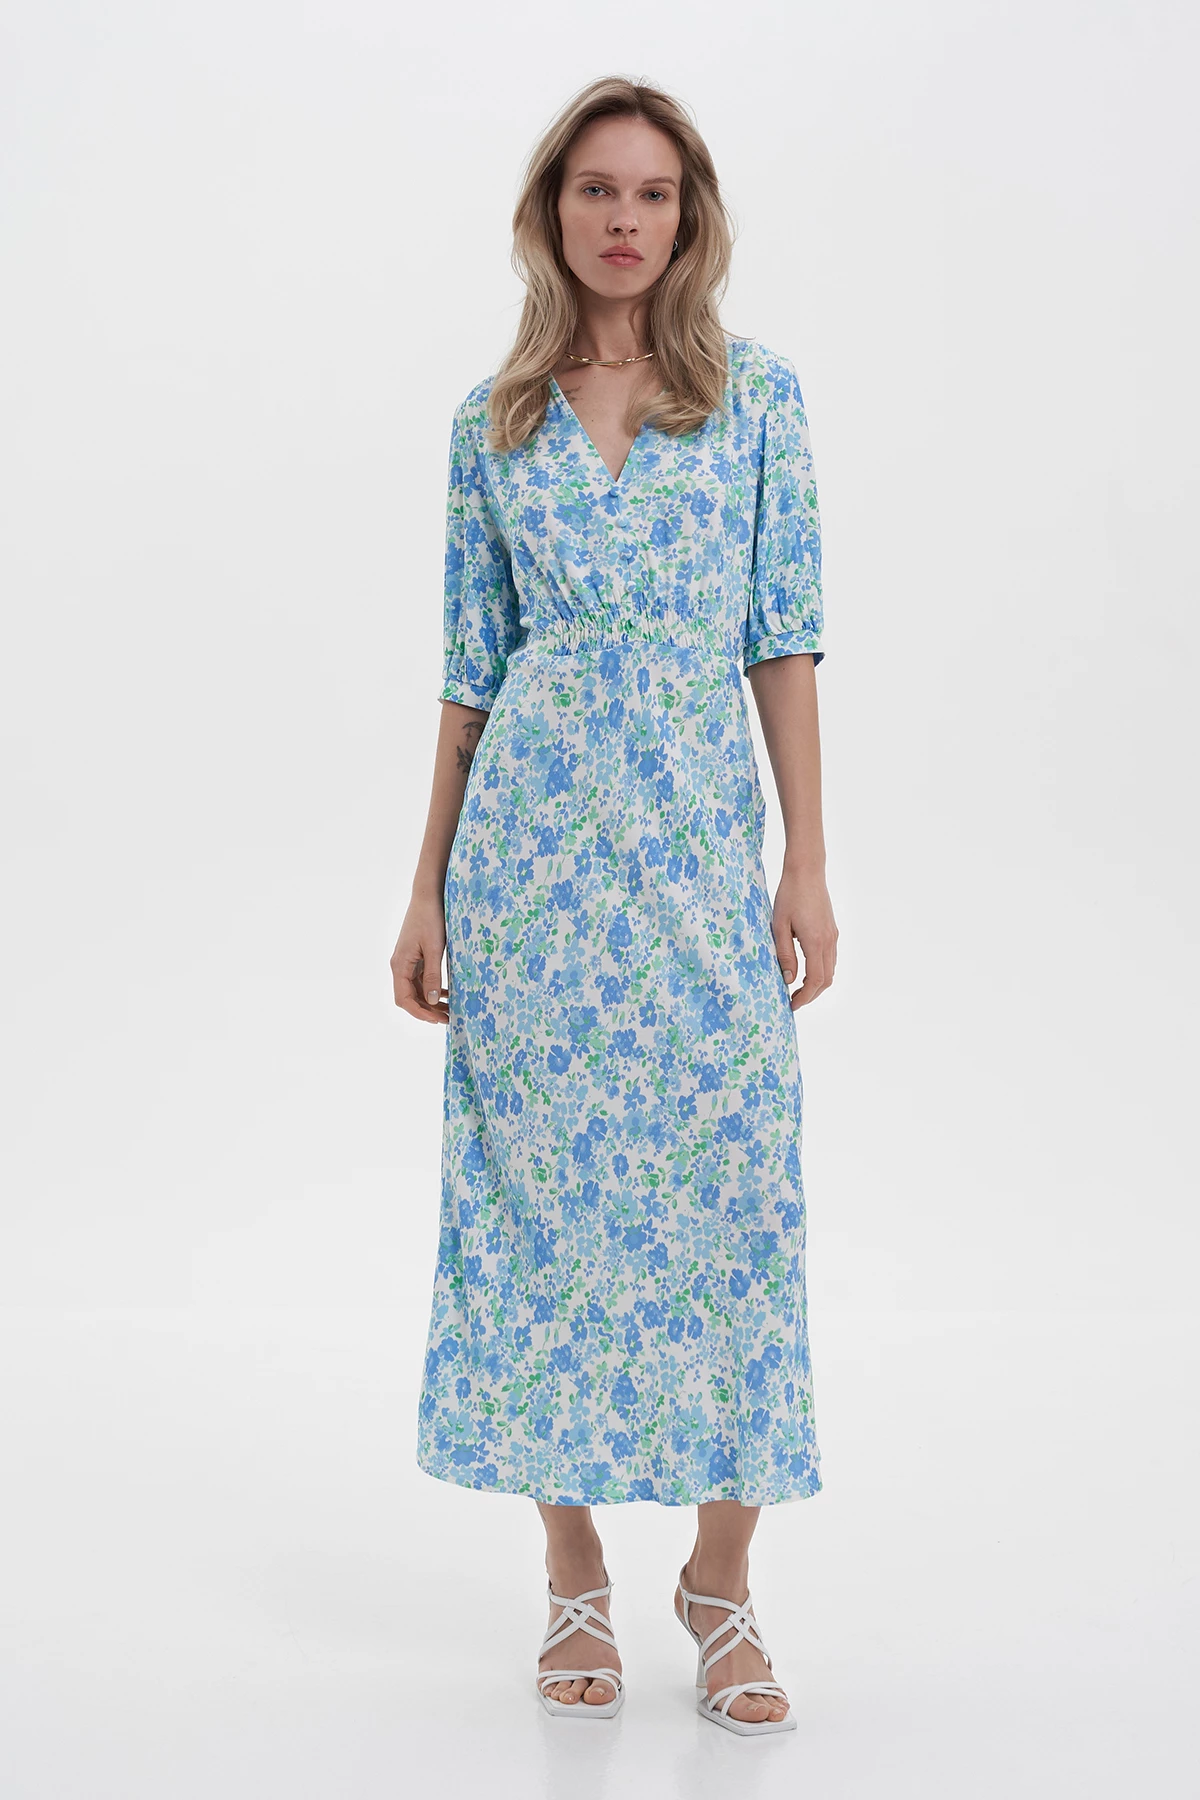 Milky short sleeve midi dress with flower print, photo 1